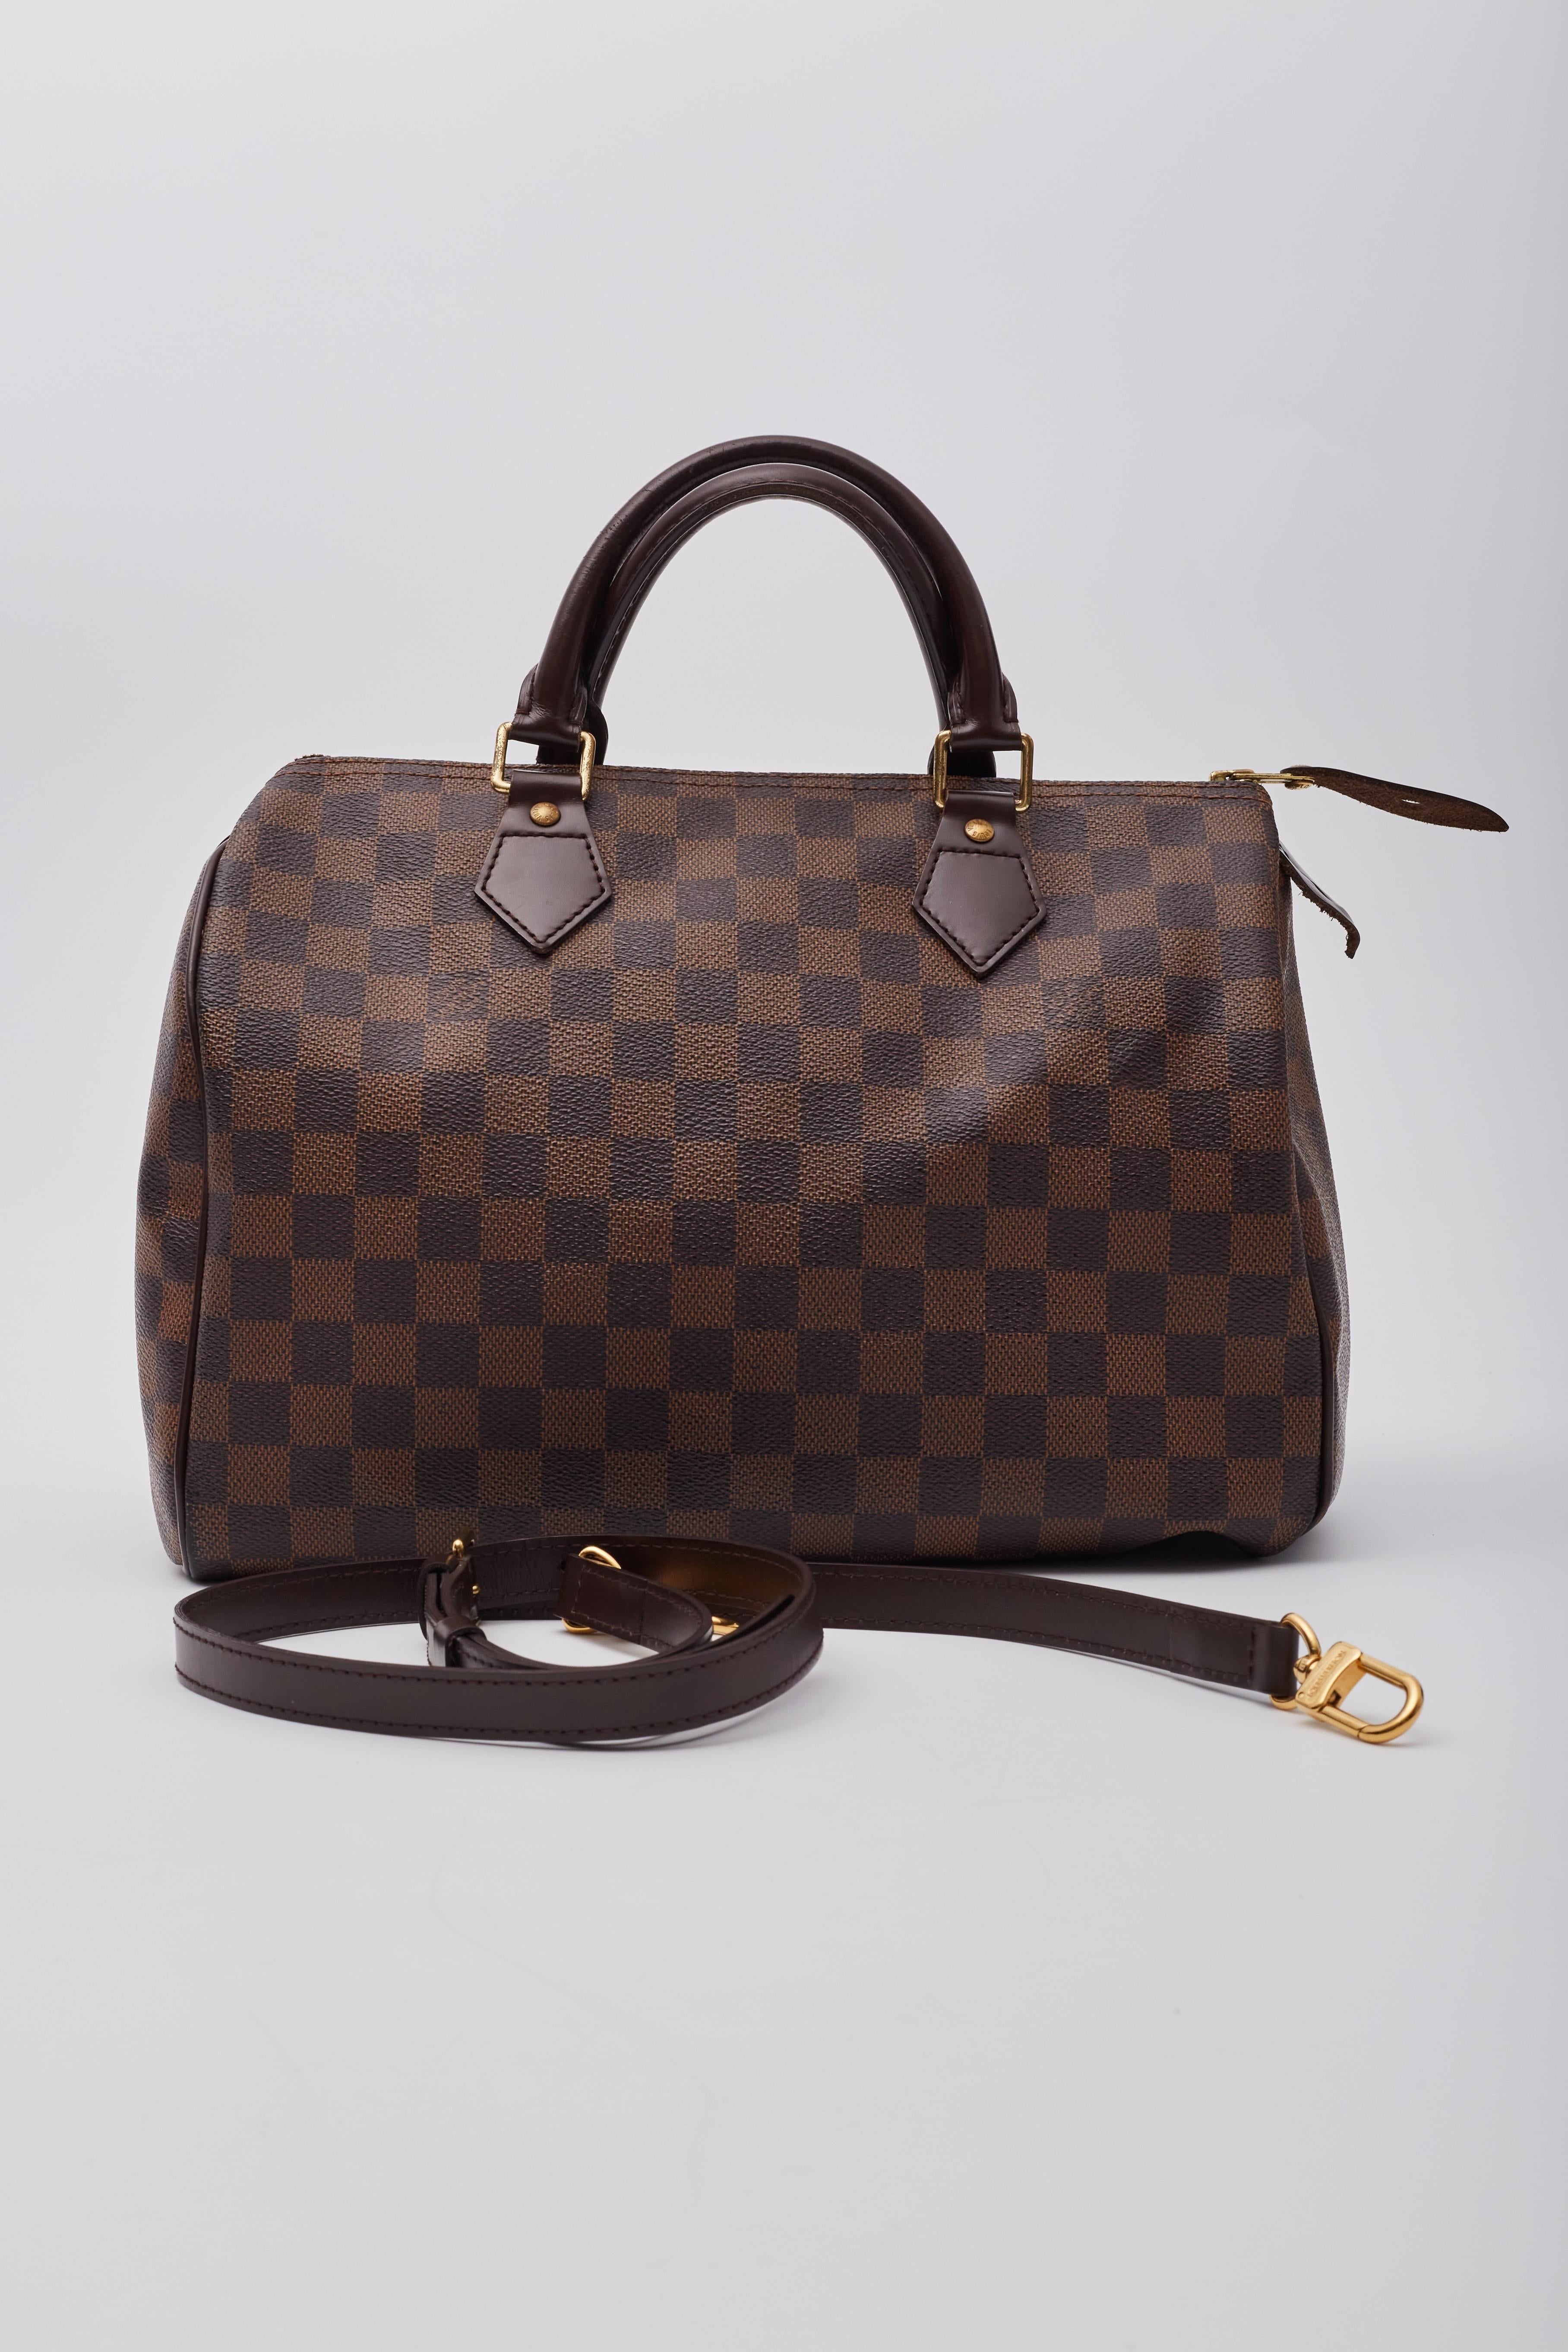 Louis Vuitton Damier Ebene Speedy 30 Handbag With Strap For Sale 7